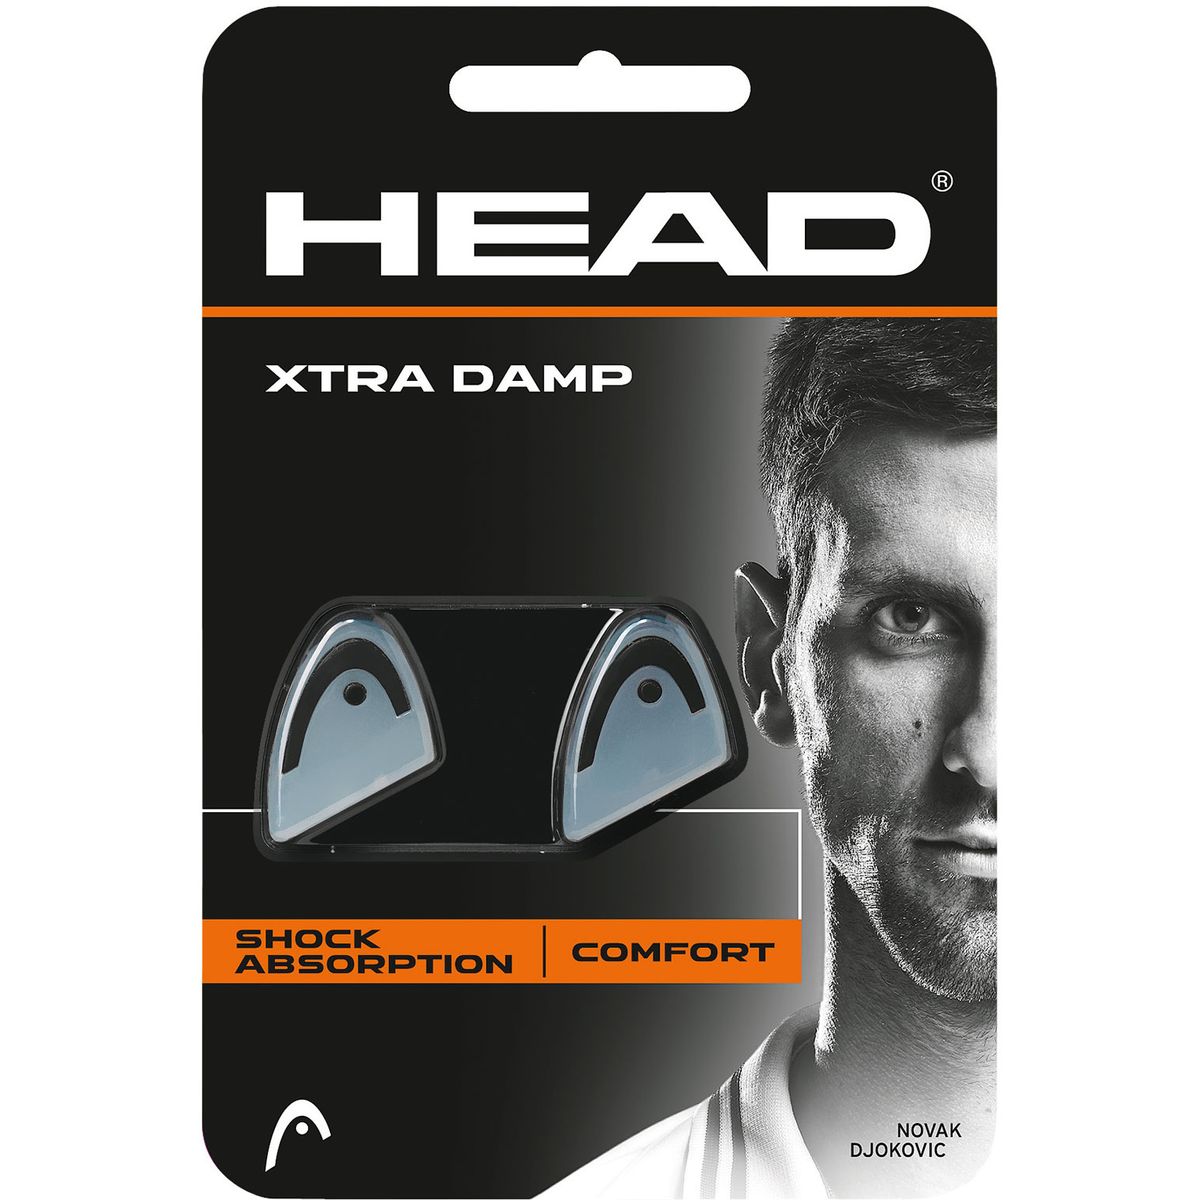 Head Xtra Damp 2 Pcs Pack attopt_internal_category_online_shop_124960